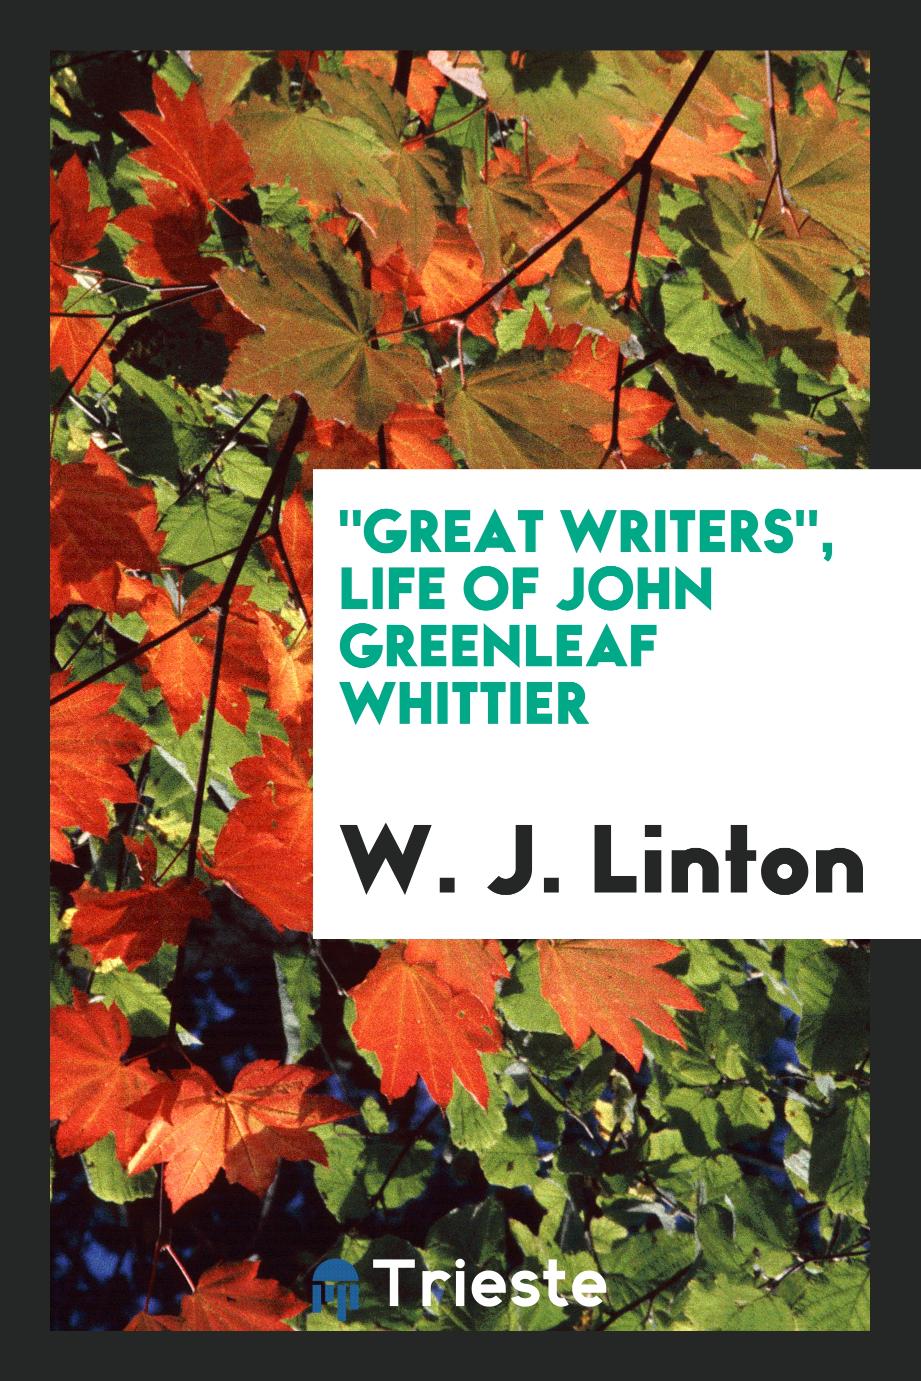 "Great writers", Life of John Greenleaf Whittier